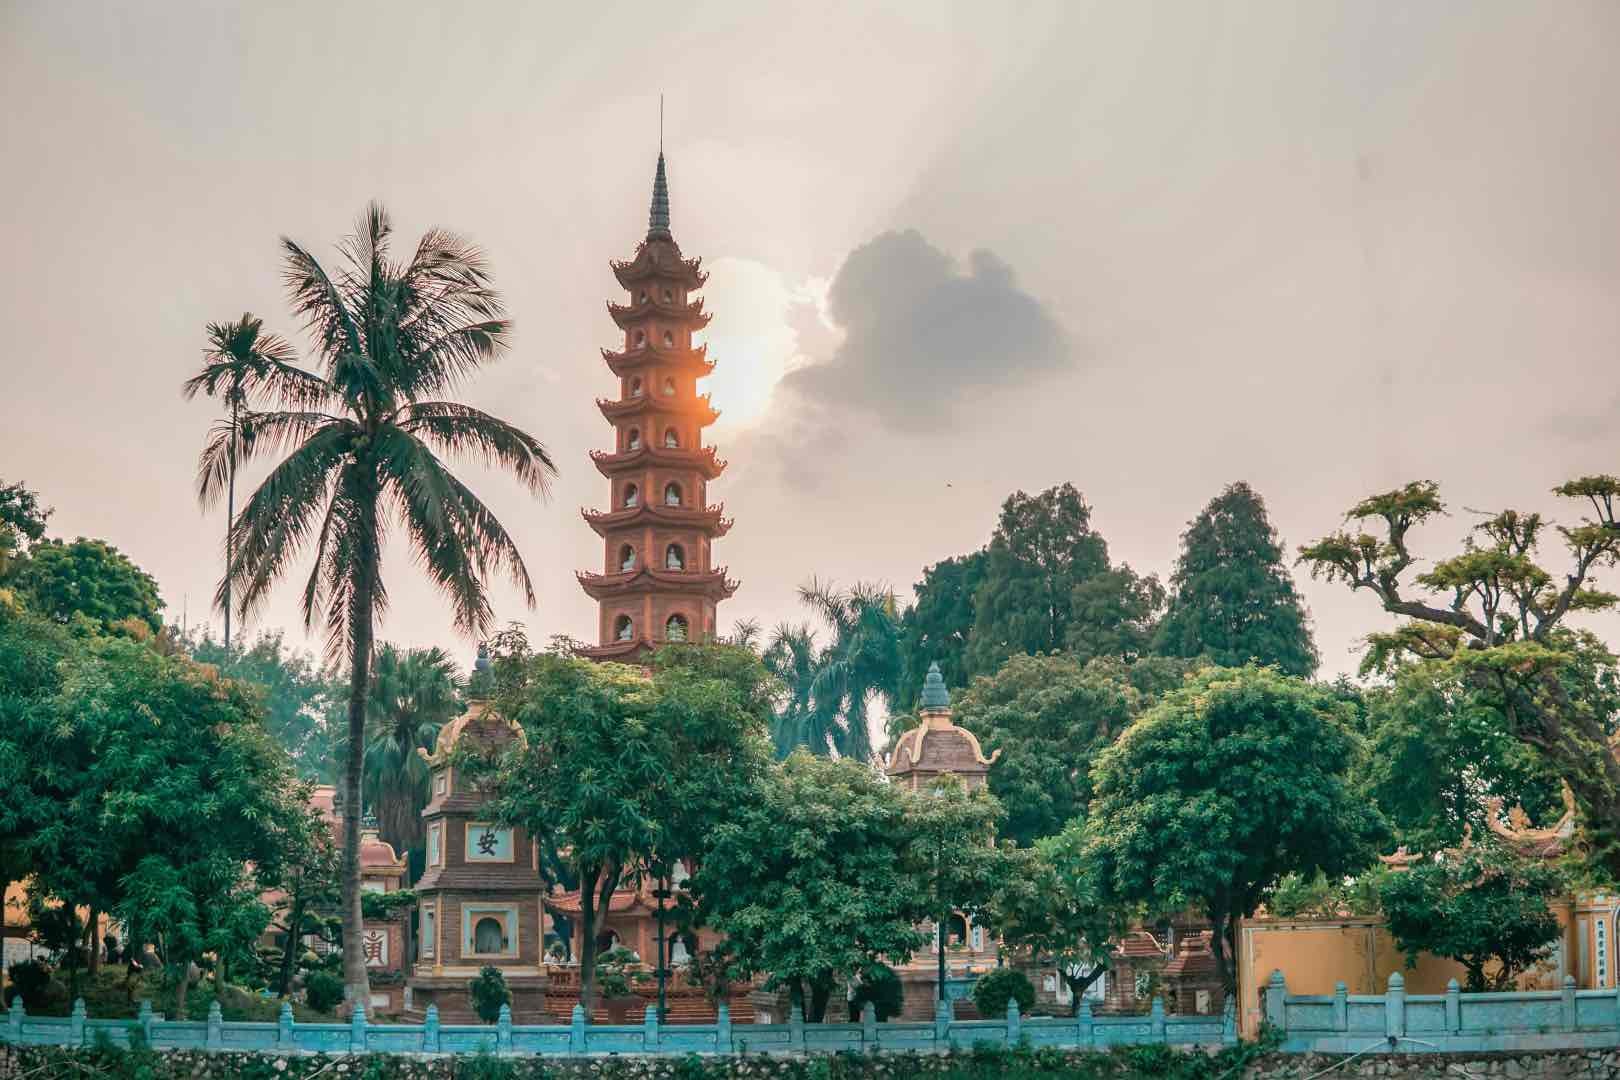 Tây Hồ, Hanoi, Vietnam